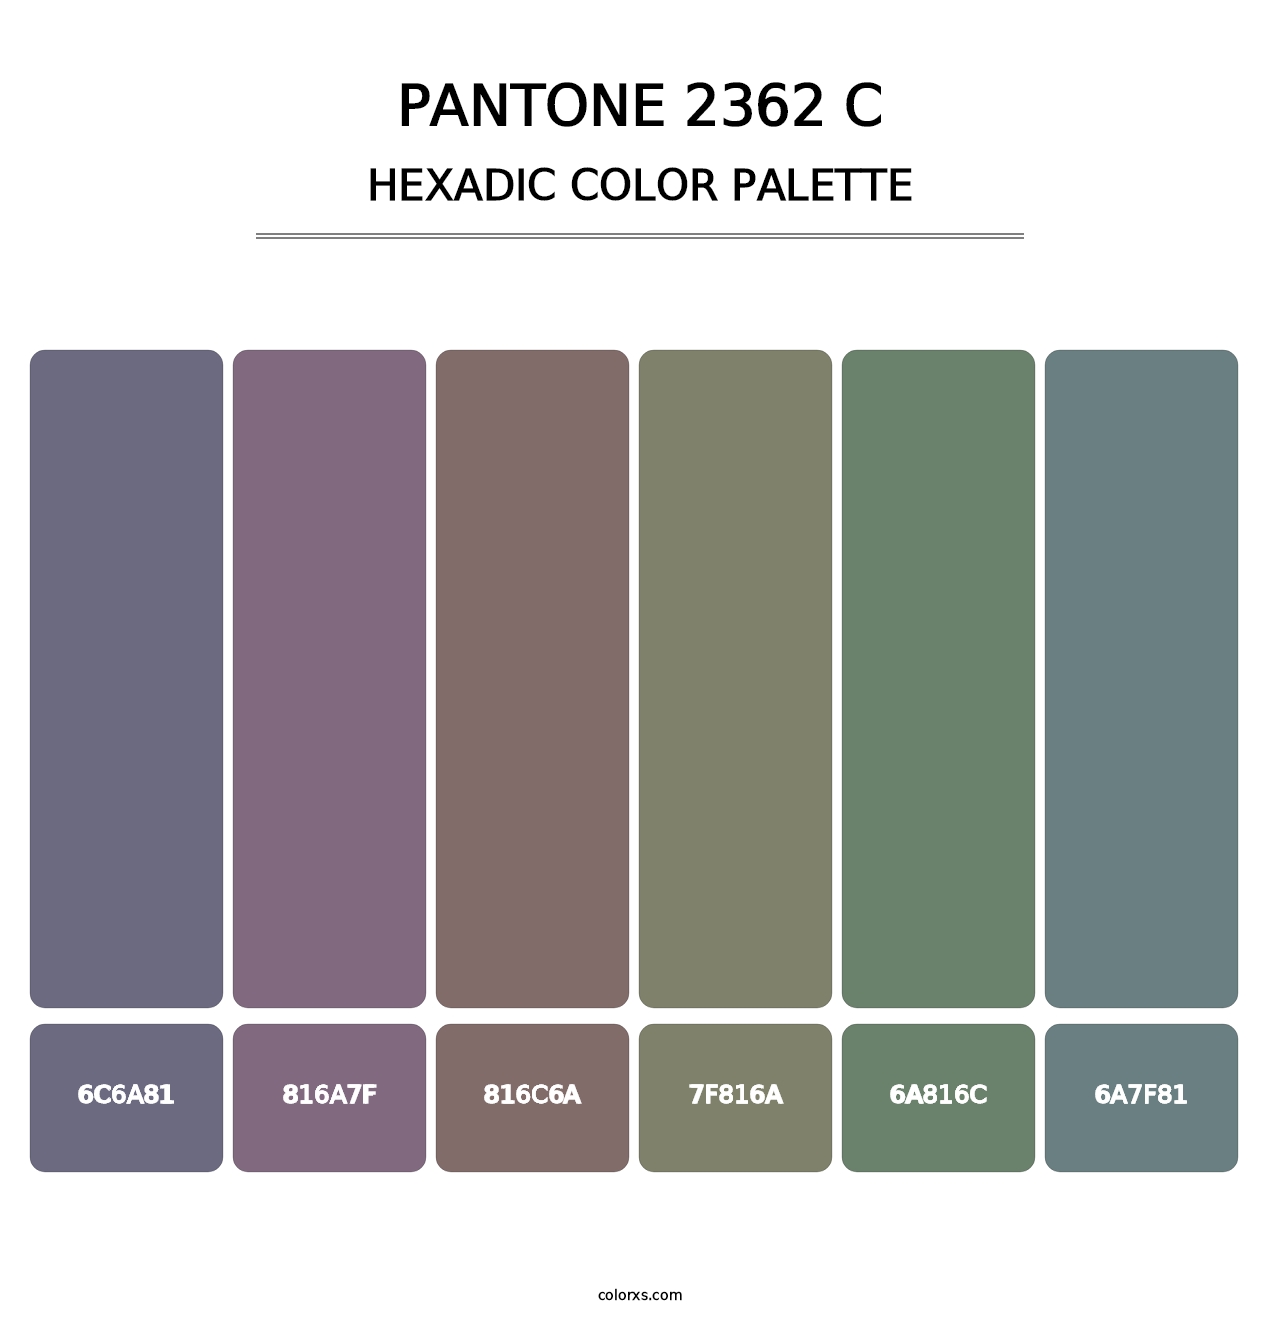 PANTONE 2362 C - Hexadic Color Palette